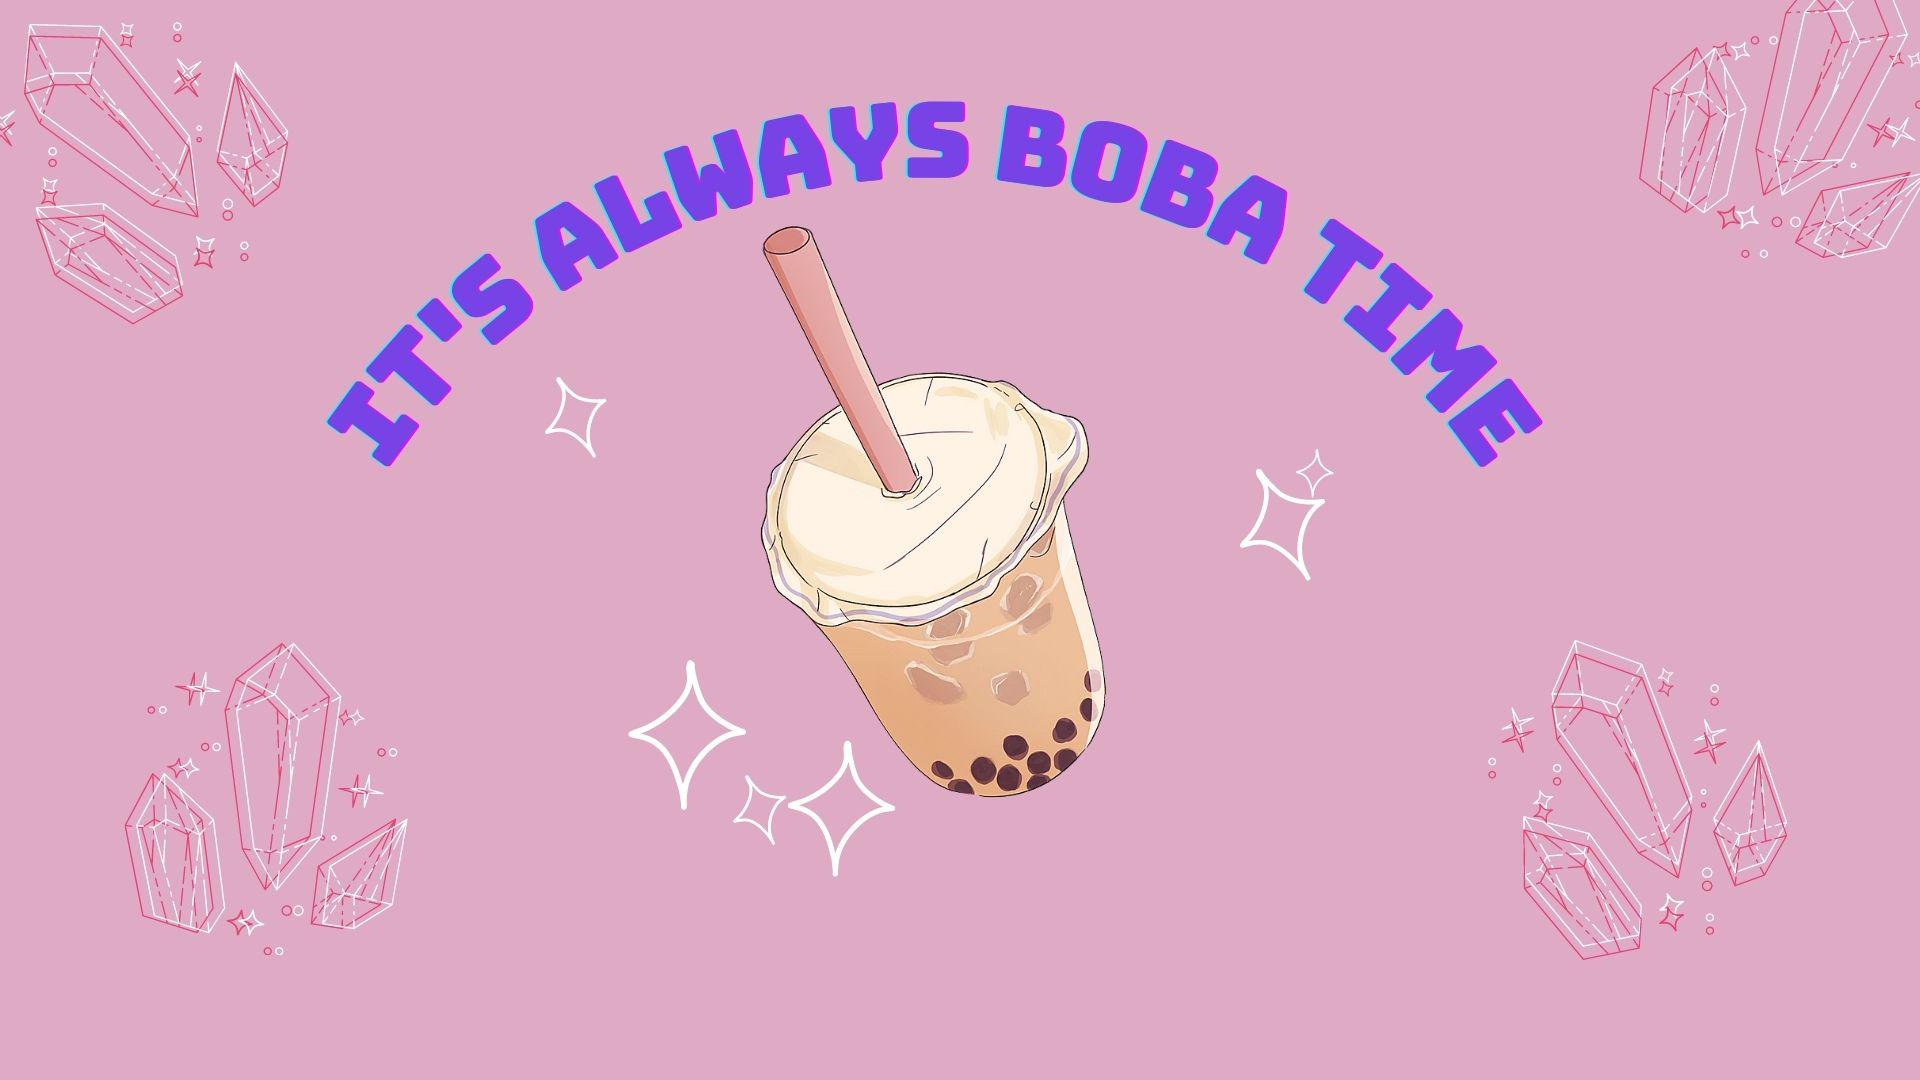 It's always boba time - Boba